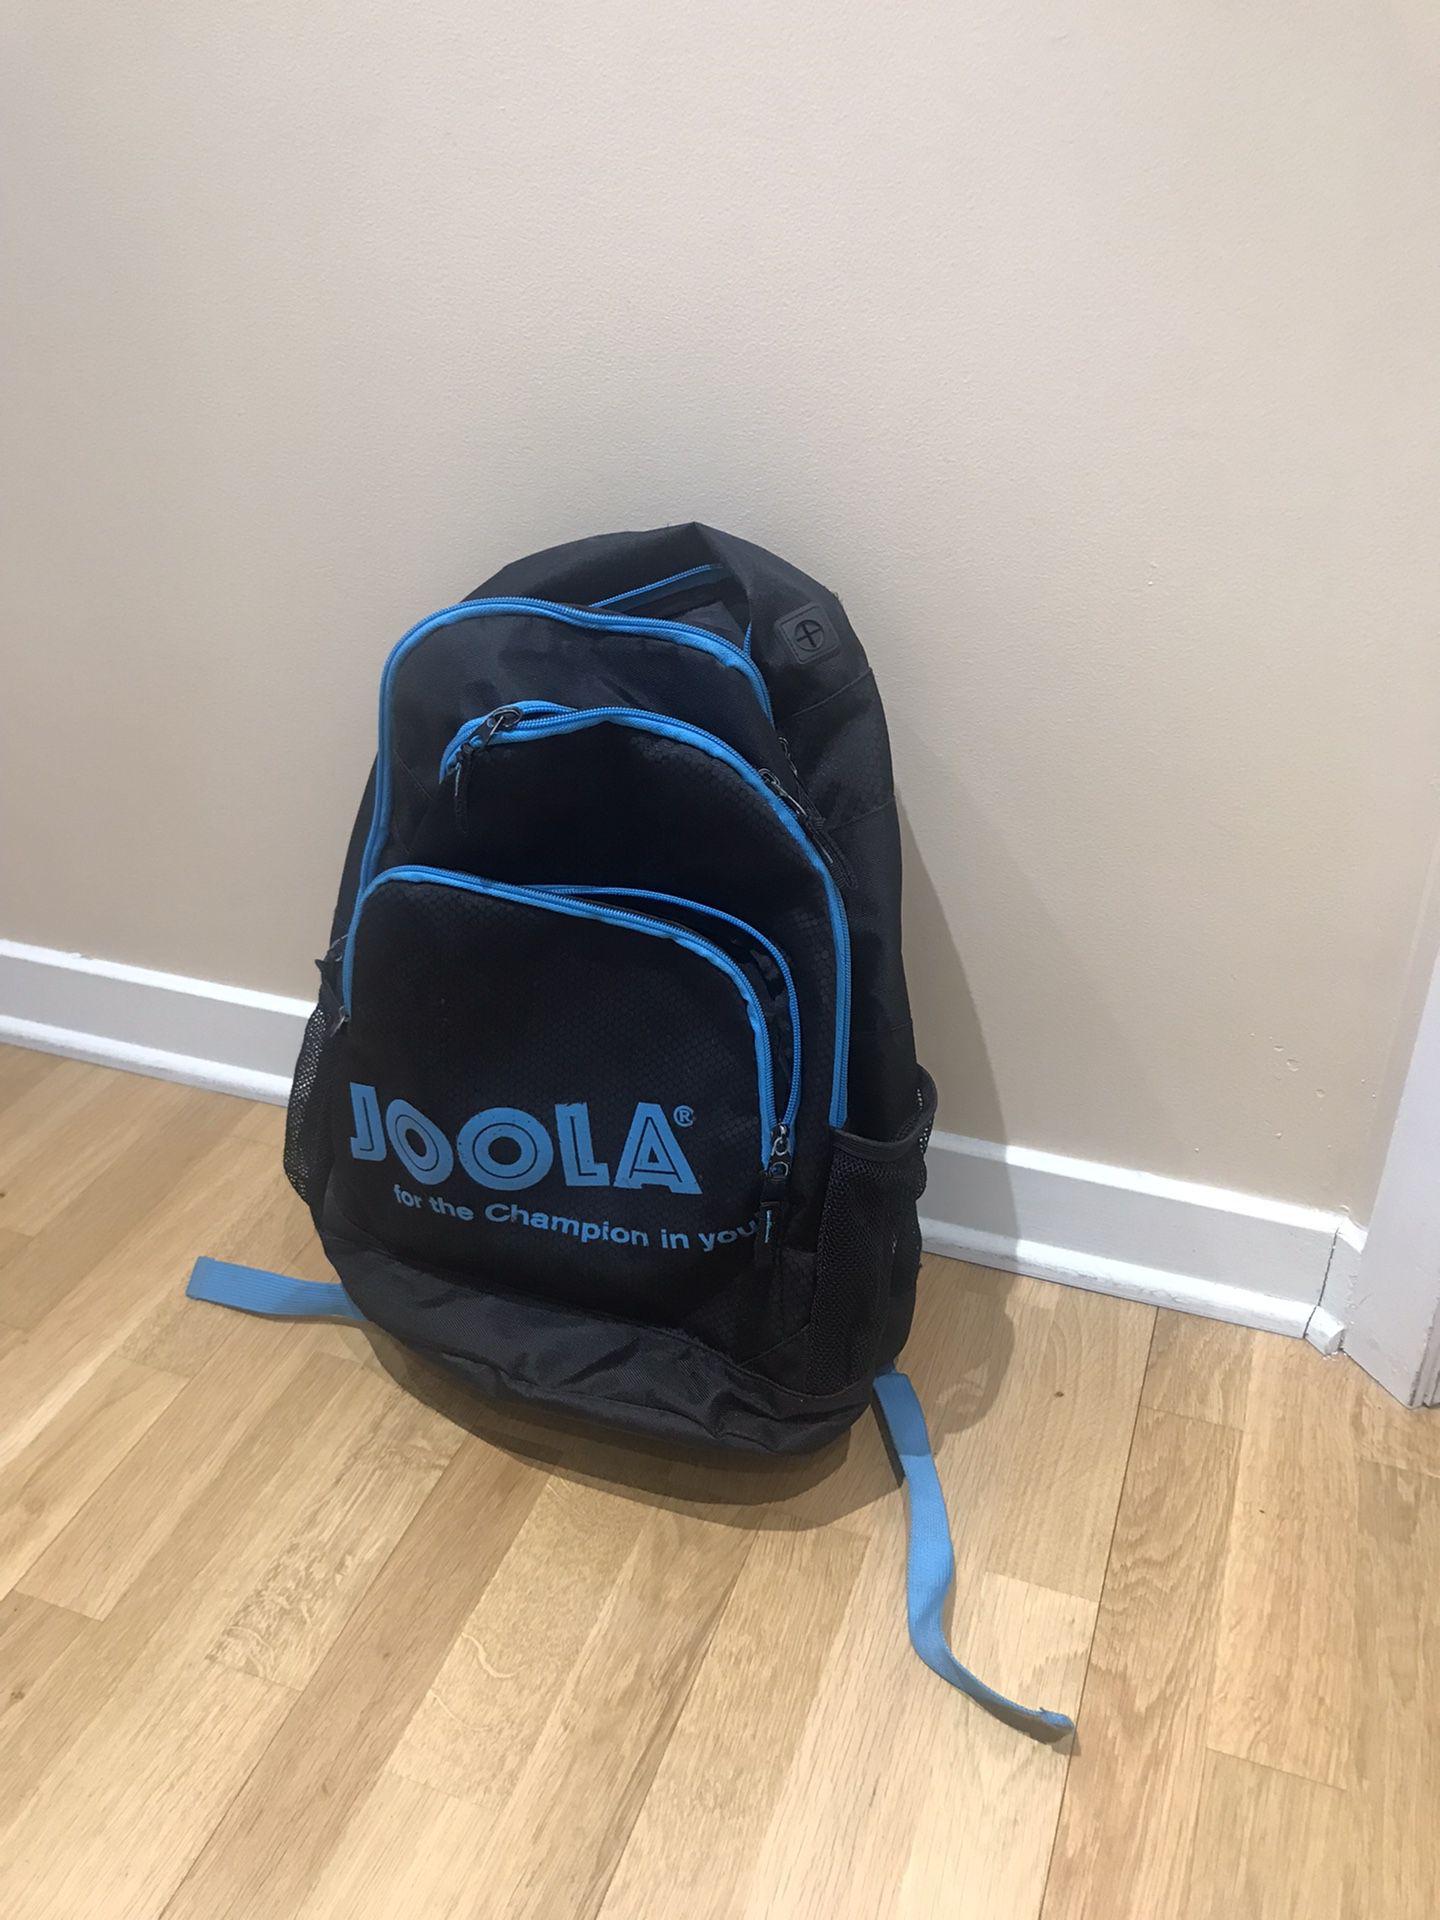 Joola Backpack School , Sports, Travel